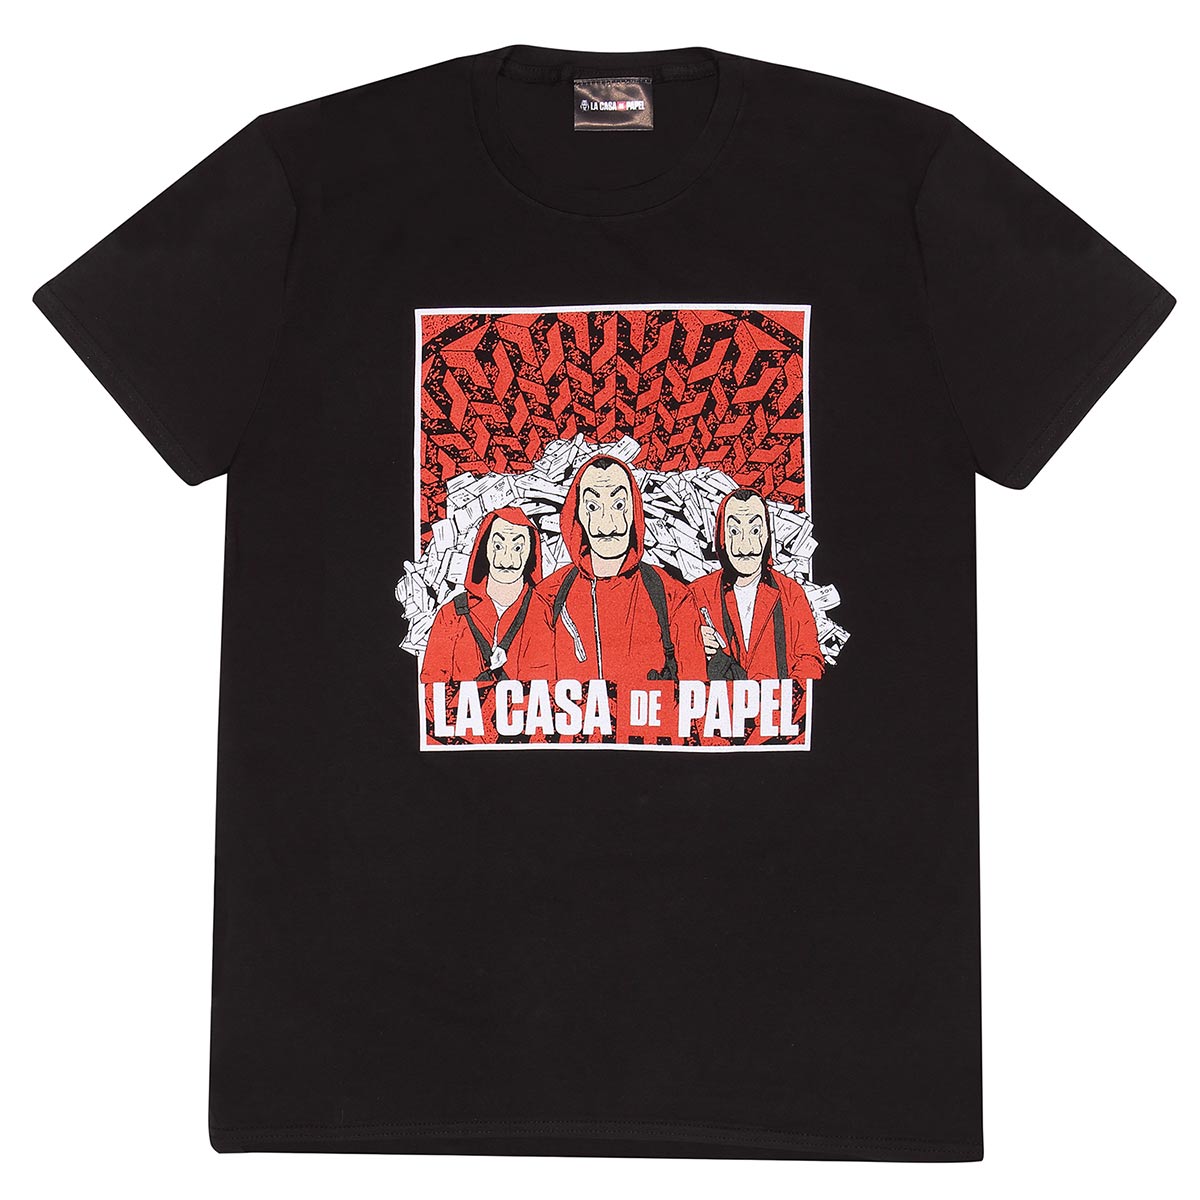 La Casa De Papel Group Shot T-Shirt